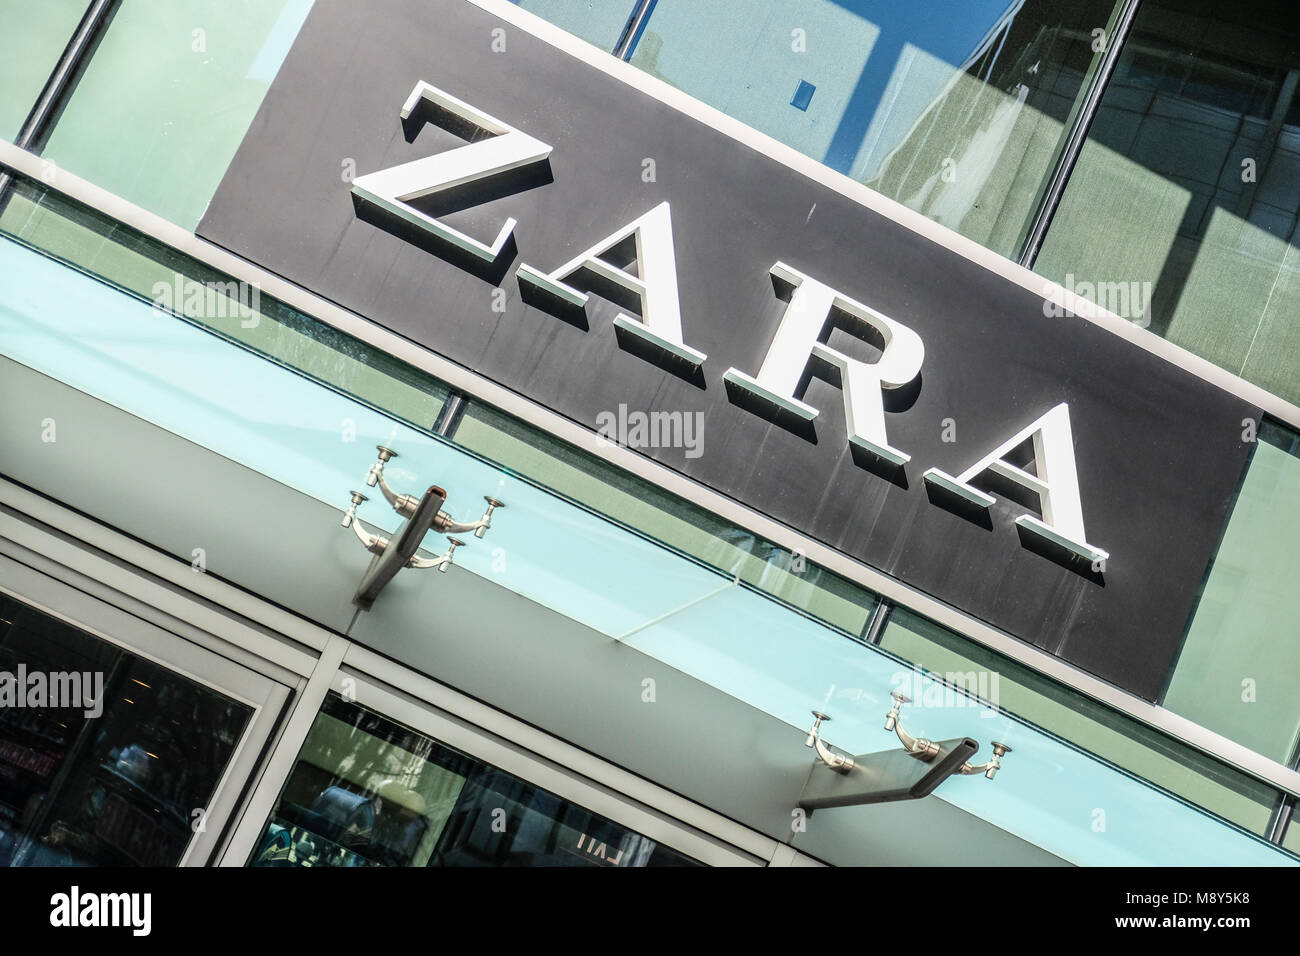 Clothing retailer Zara's storefront in downtown Seattle Stock Photo - Alamy